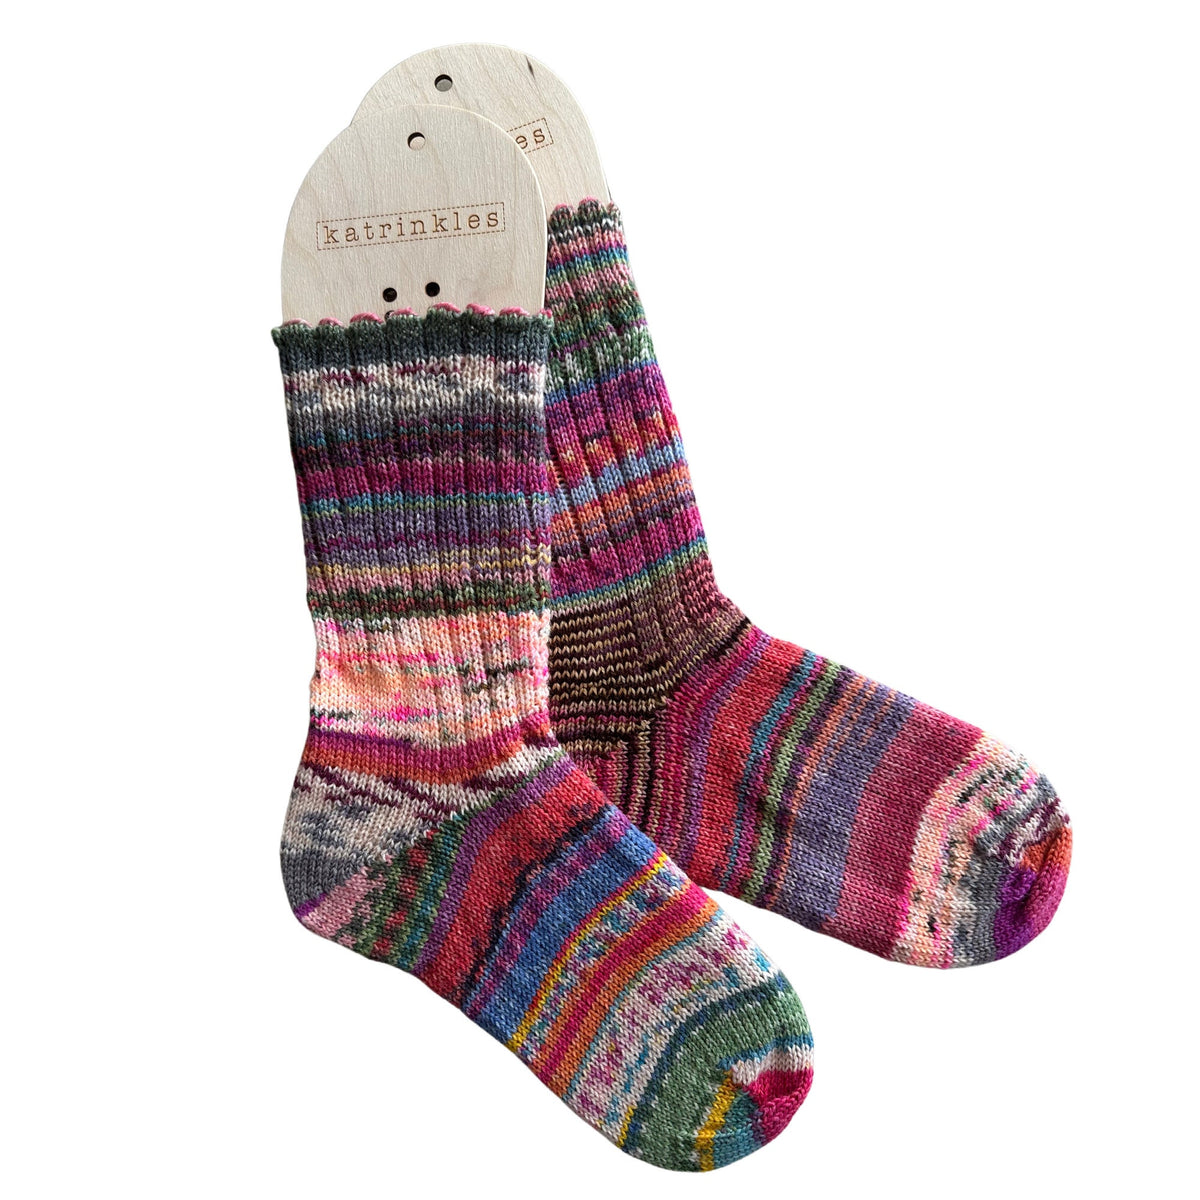 Colorful Scrappy Merino Wool Socks, HandMade Women's Wool Socks, Unique Colored Socks, Winter Wool Socks, Colorful Wool Socks, Unique